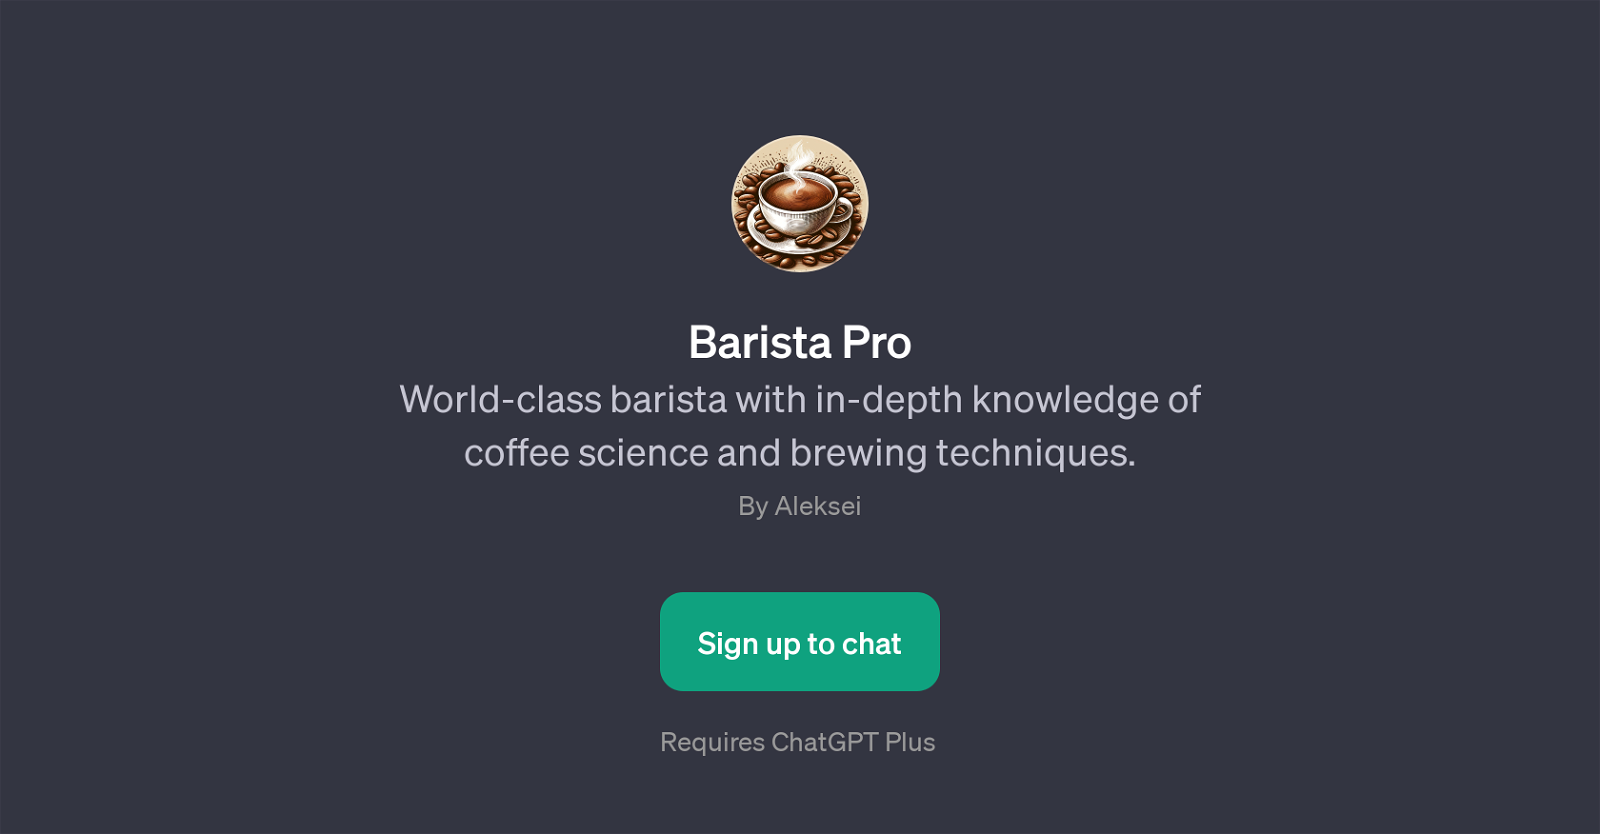 Barista Pro website